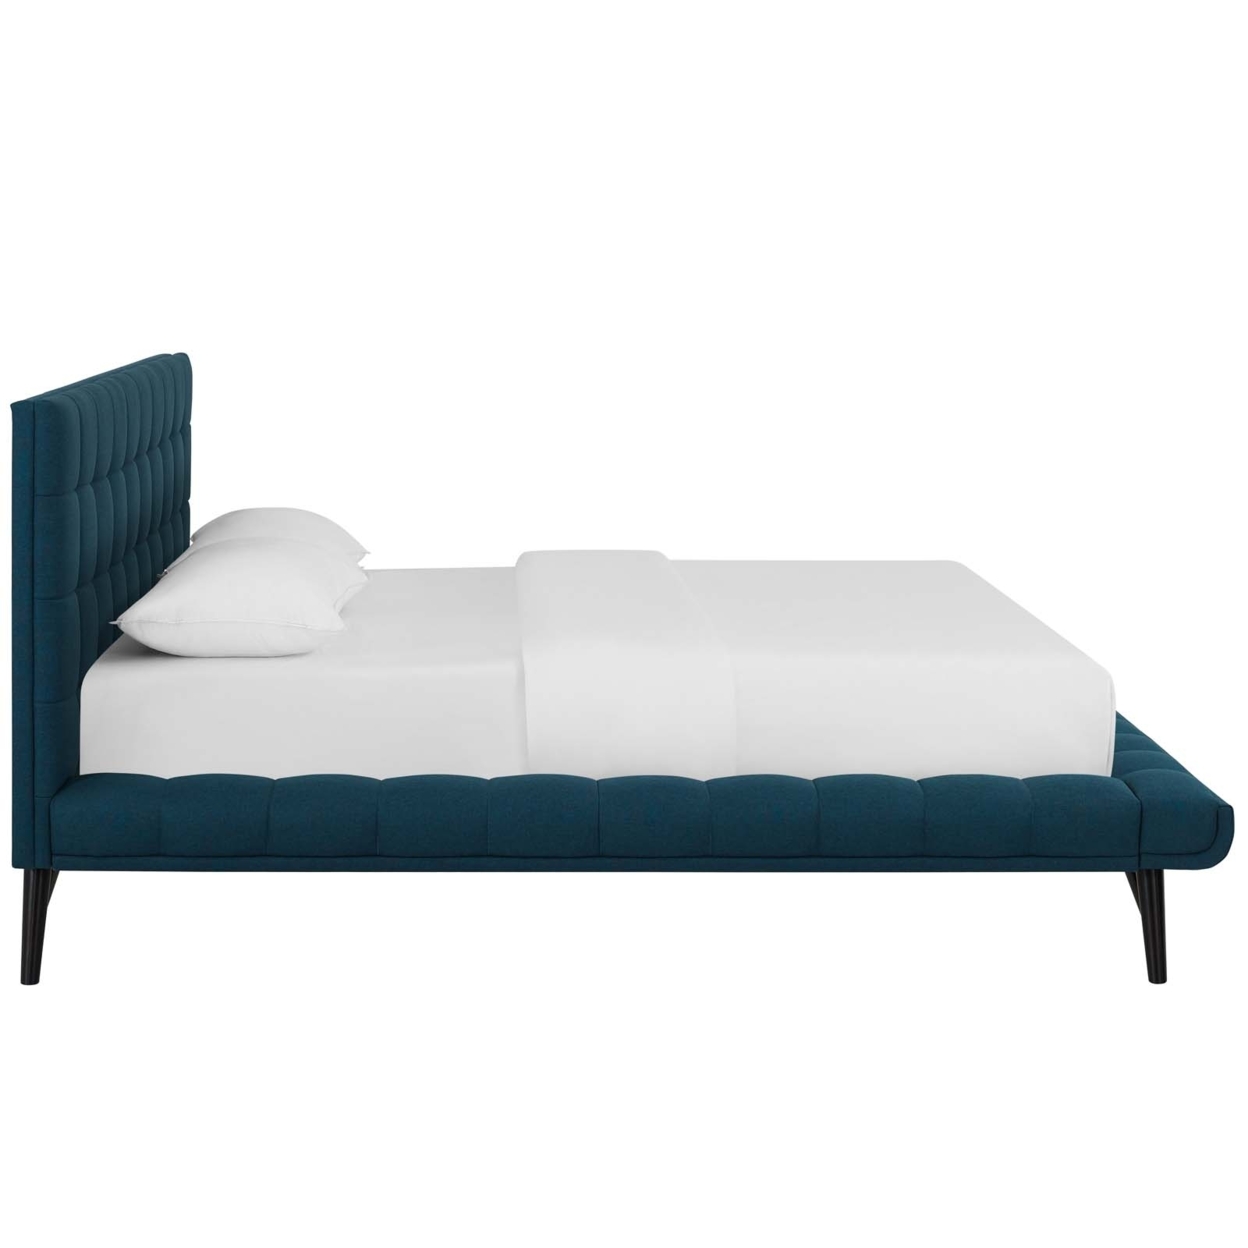 Julia Queen Biscuit Tufted Upholstered Fabric Platform Bed, Blue